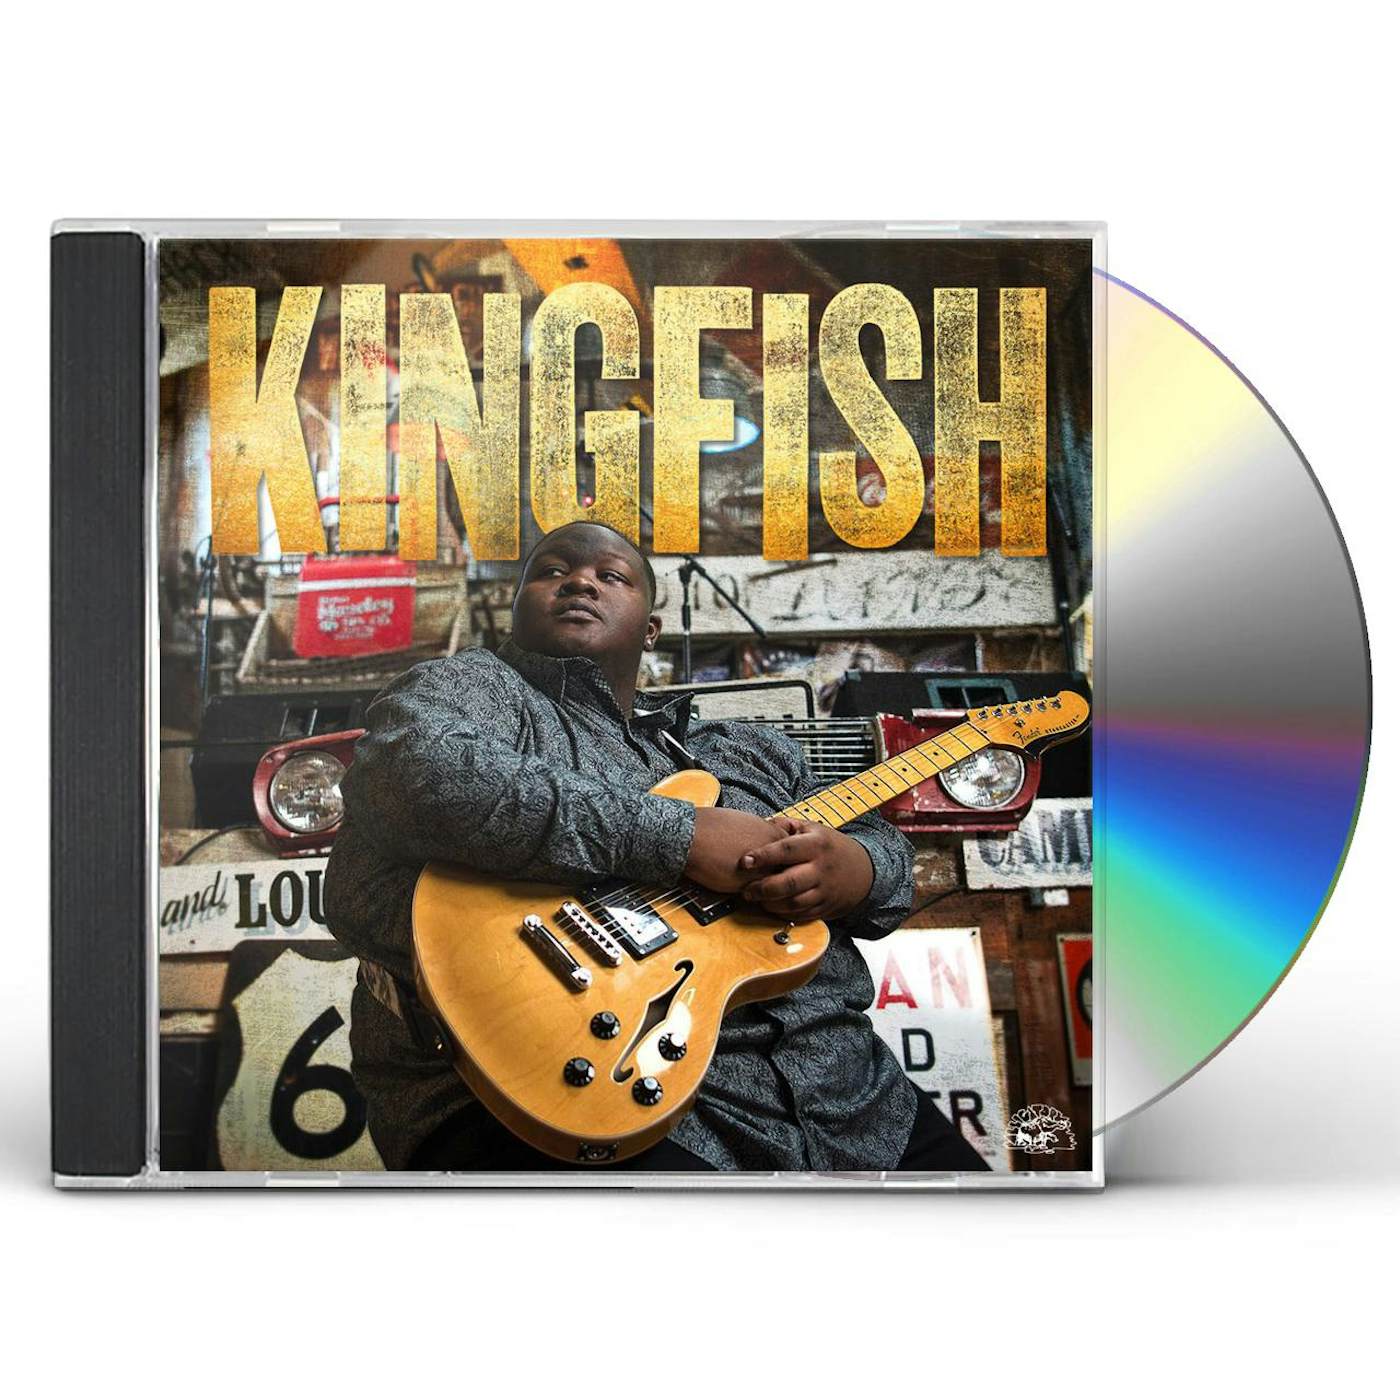 Christone Kingfish Ingram KINGFISH CD